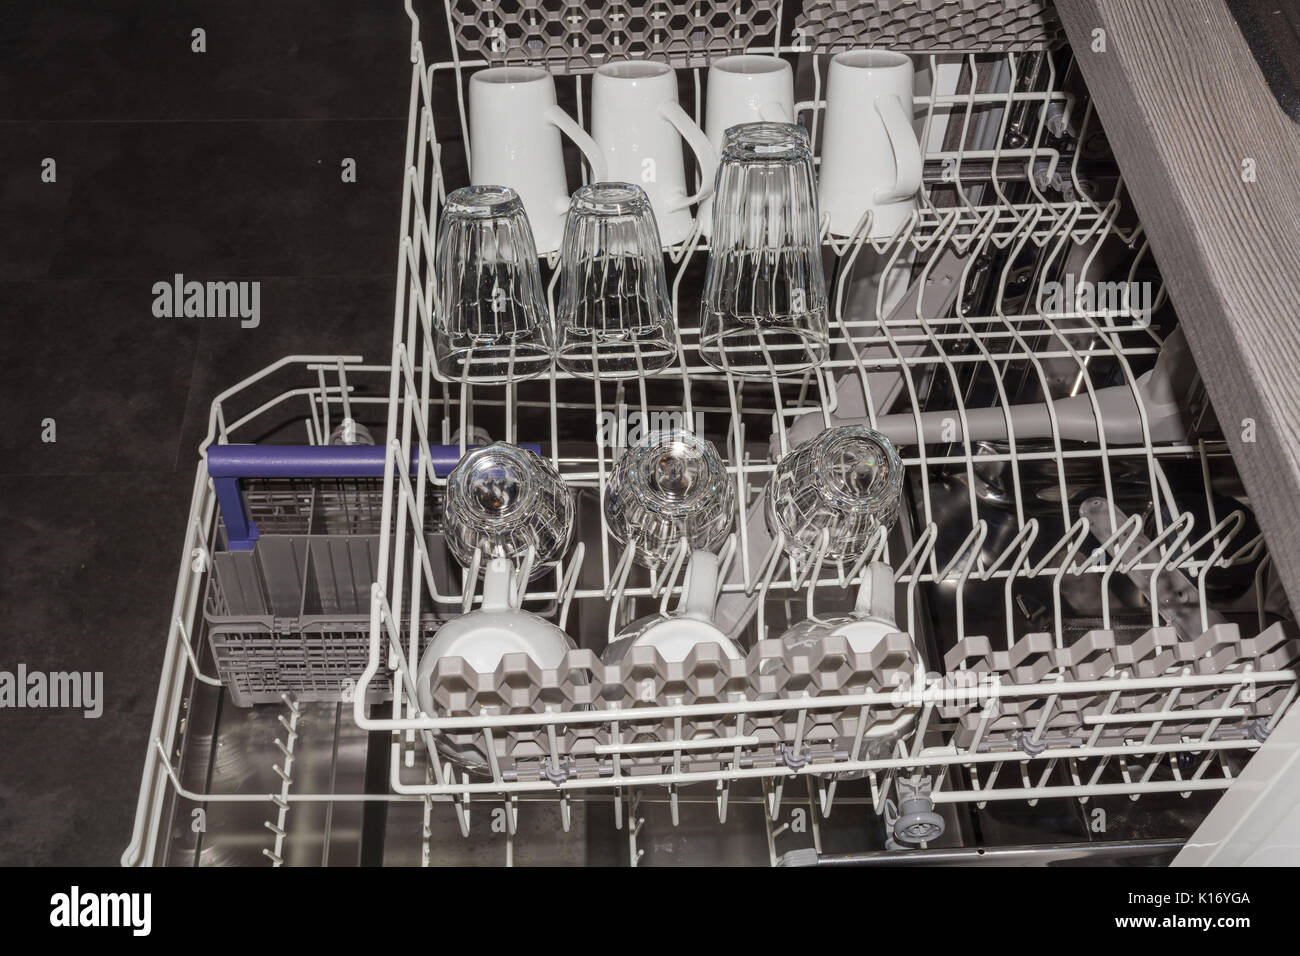 Dishwasher salt hi-res stock photography and images - Alamy